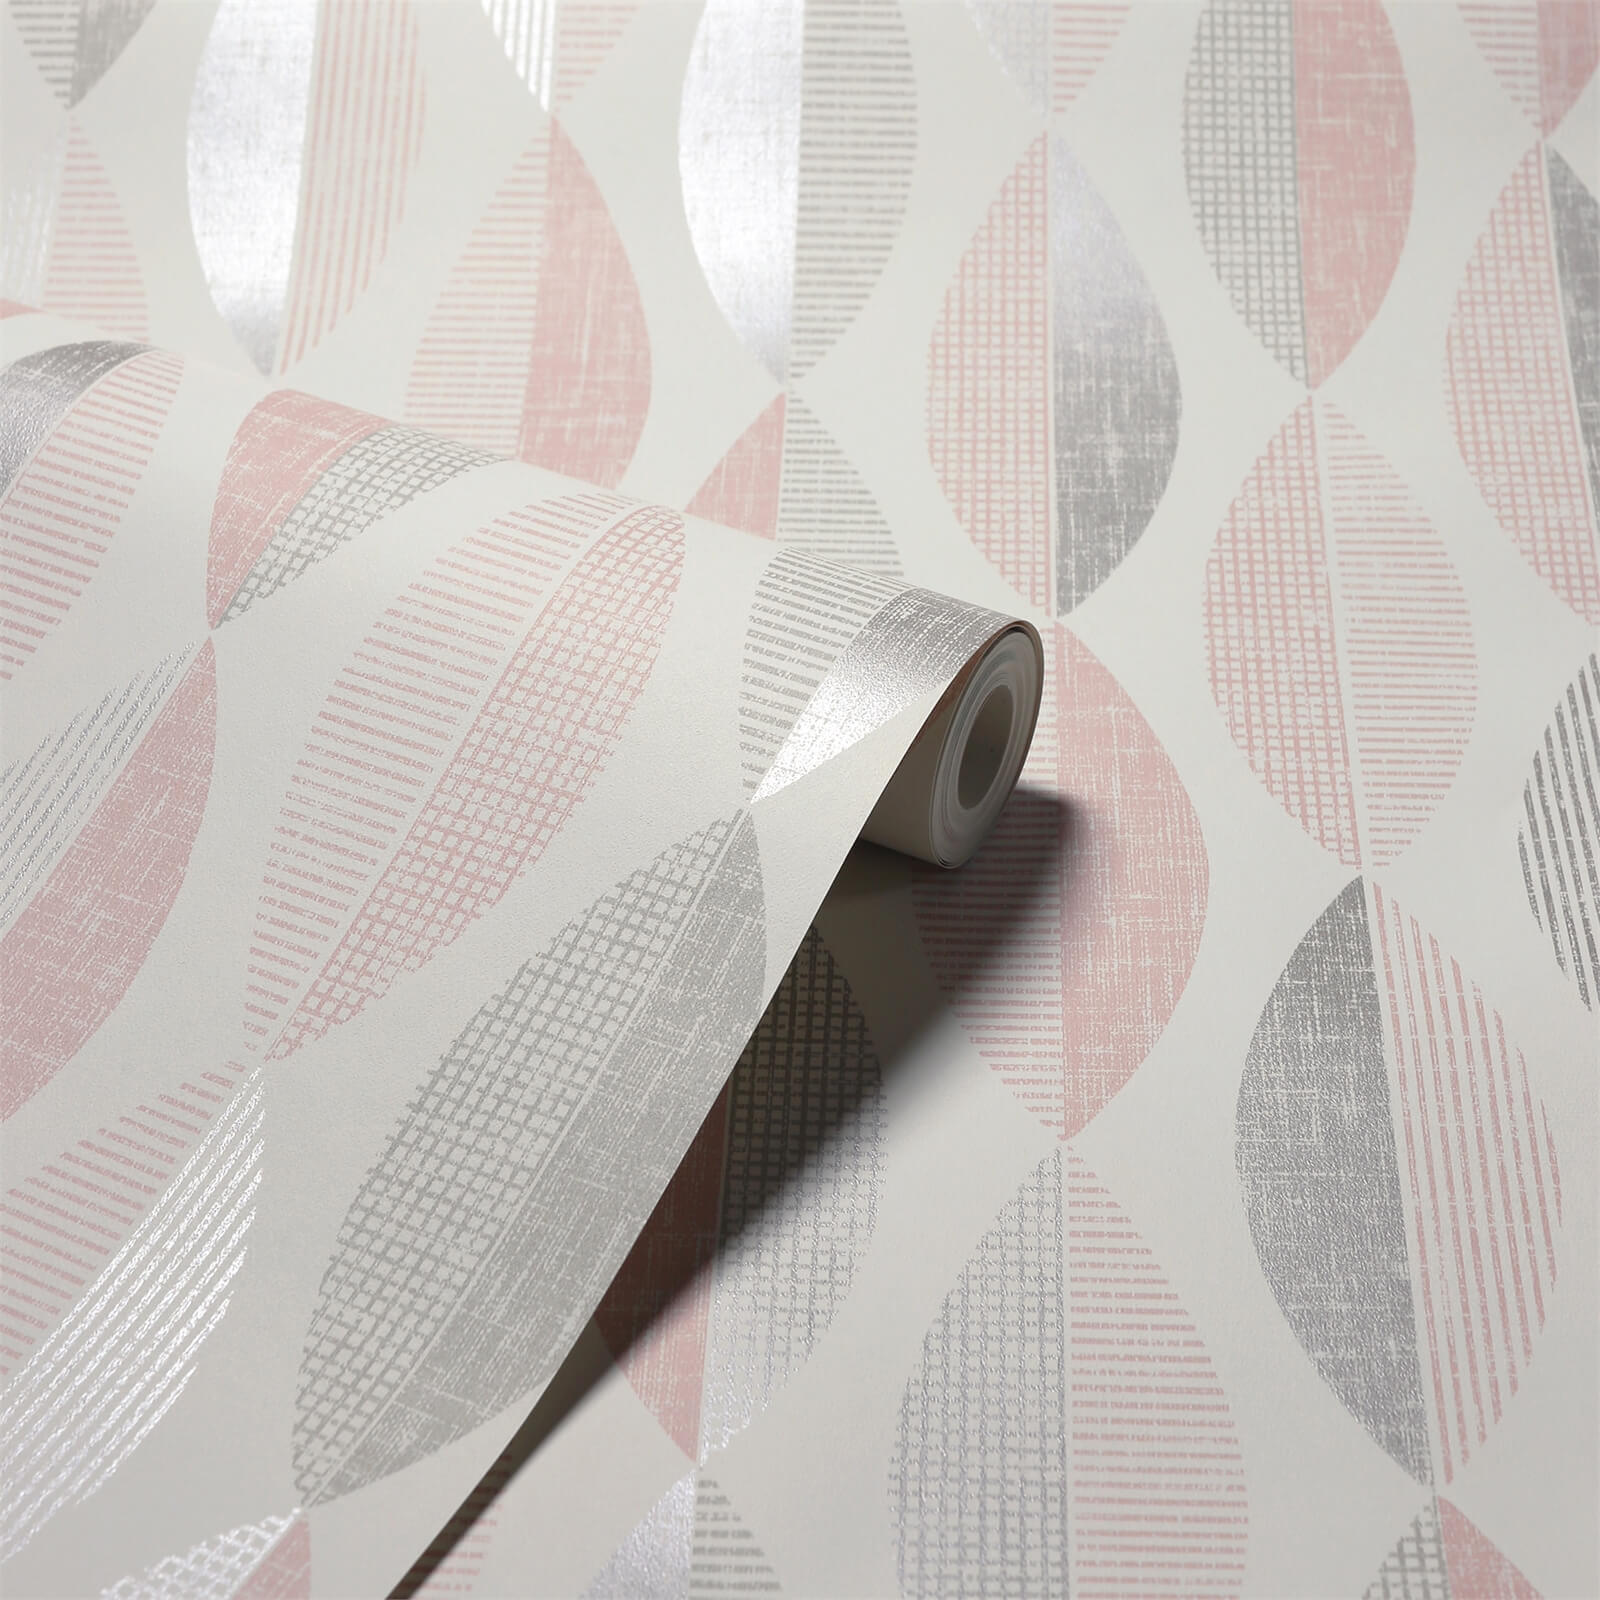 Arthouse Aziza Geometric Smooth Metallic Blush Wallpaper